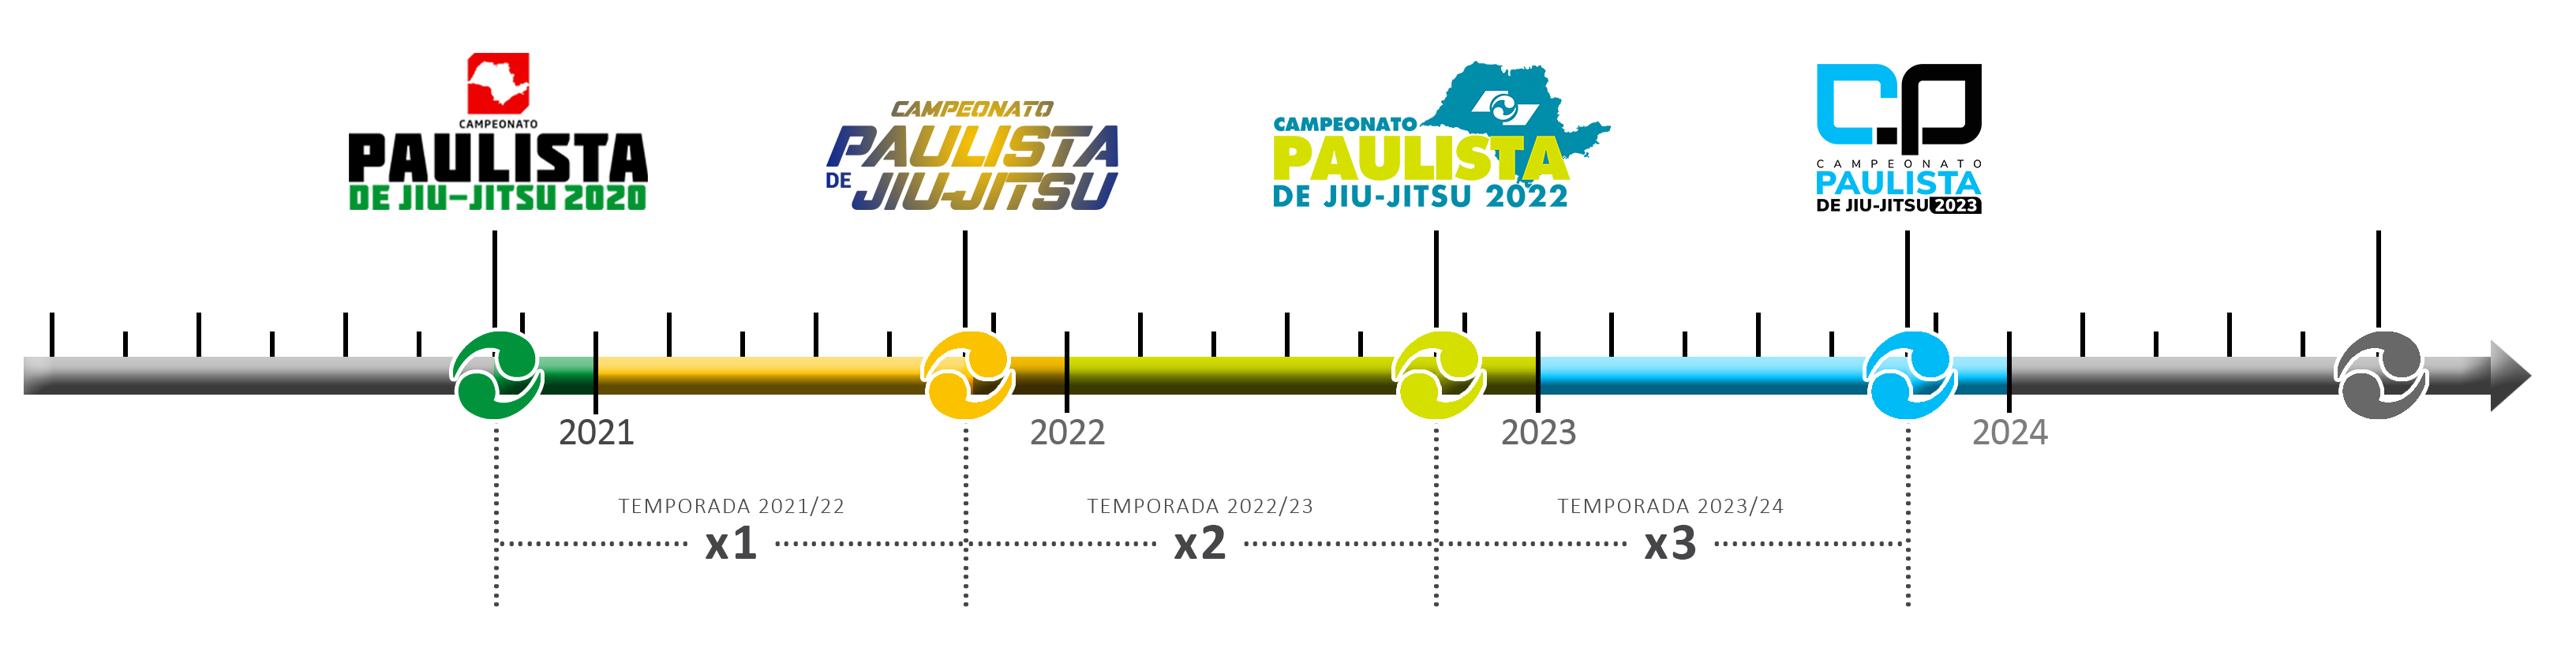 Atualizado: Ranking Paulista de Xadrez tem quatro fernandopolenses